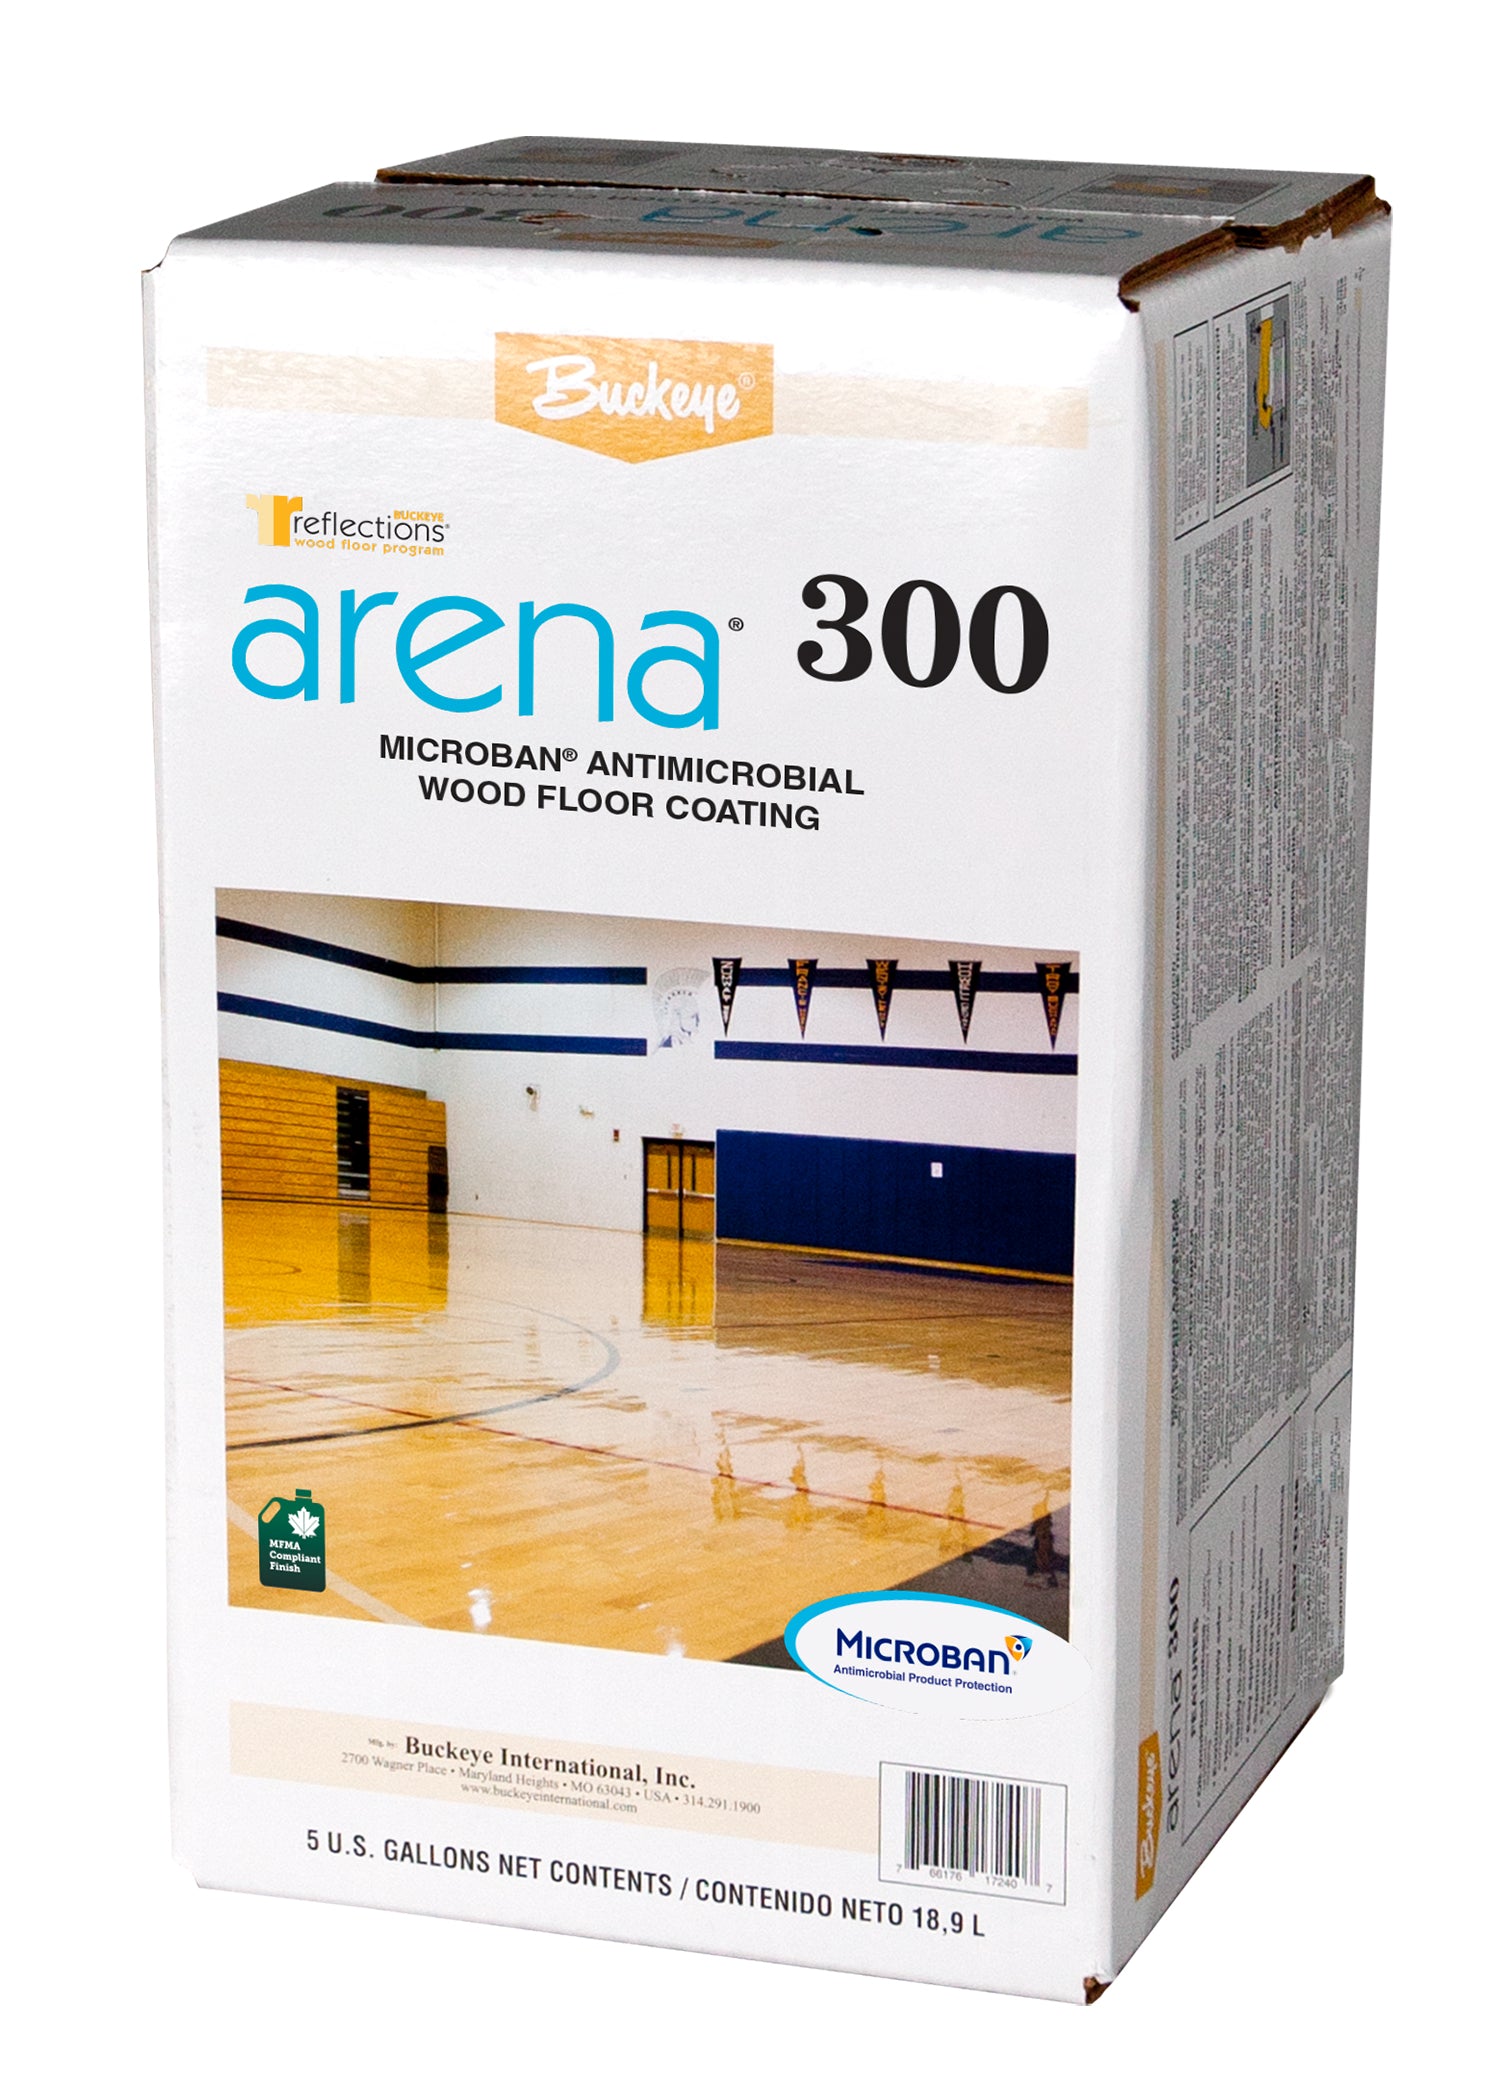 ARENA 300 Microban Antimicrobial Wood Floor Coating | IRIS